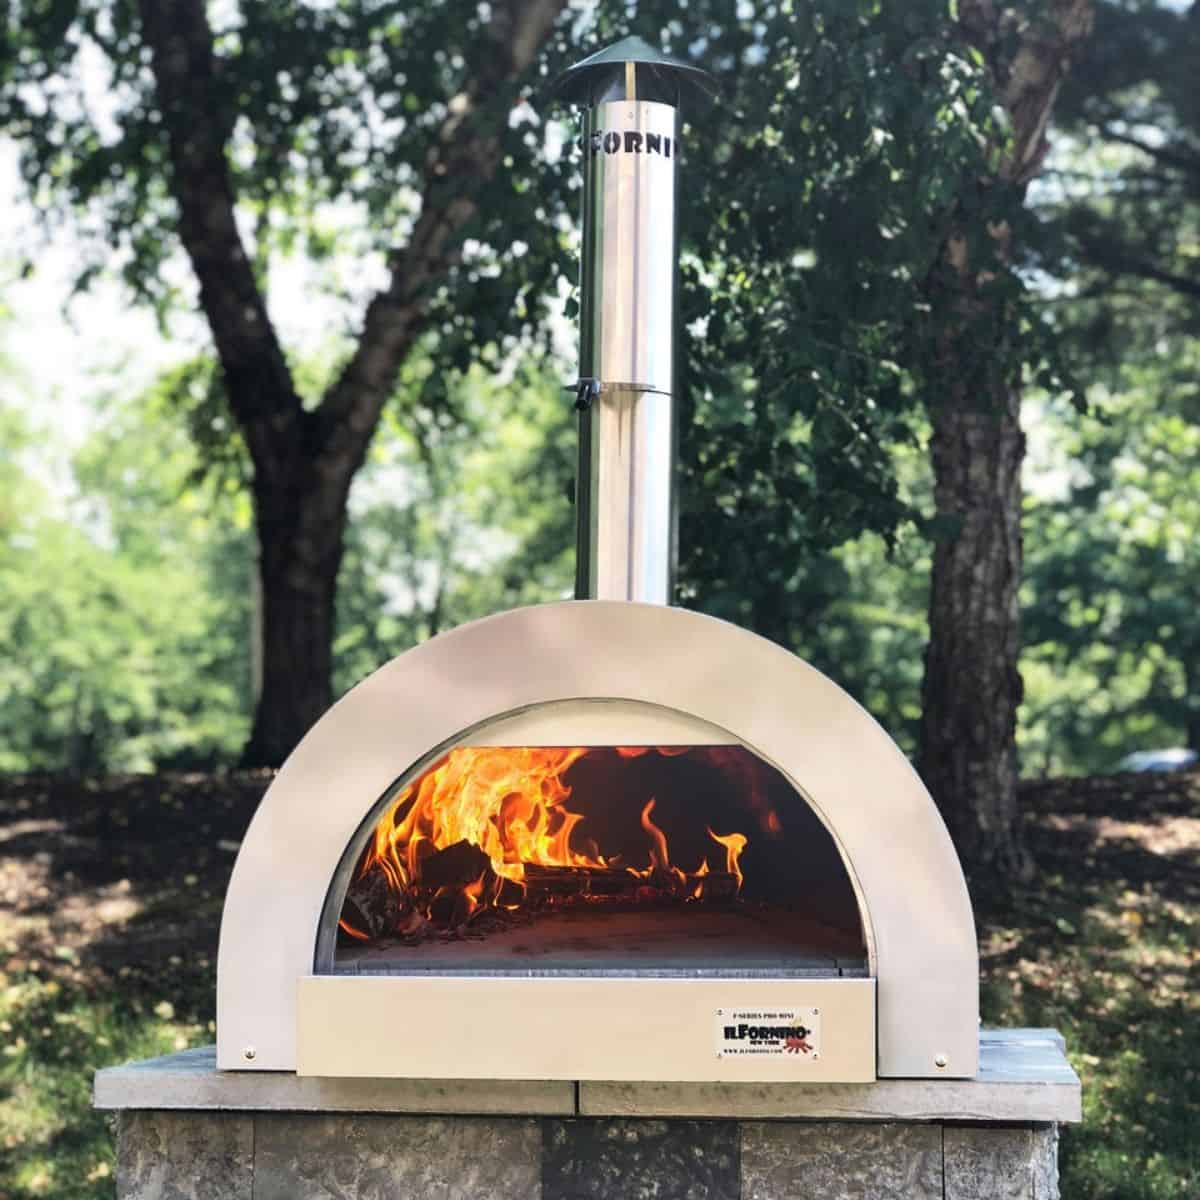 Modern oven pizza